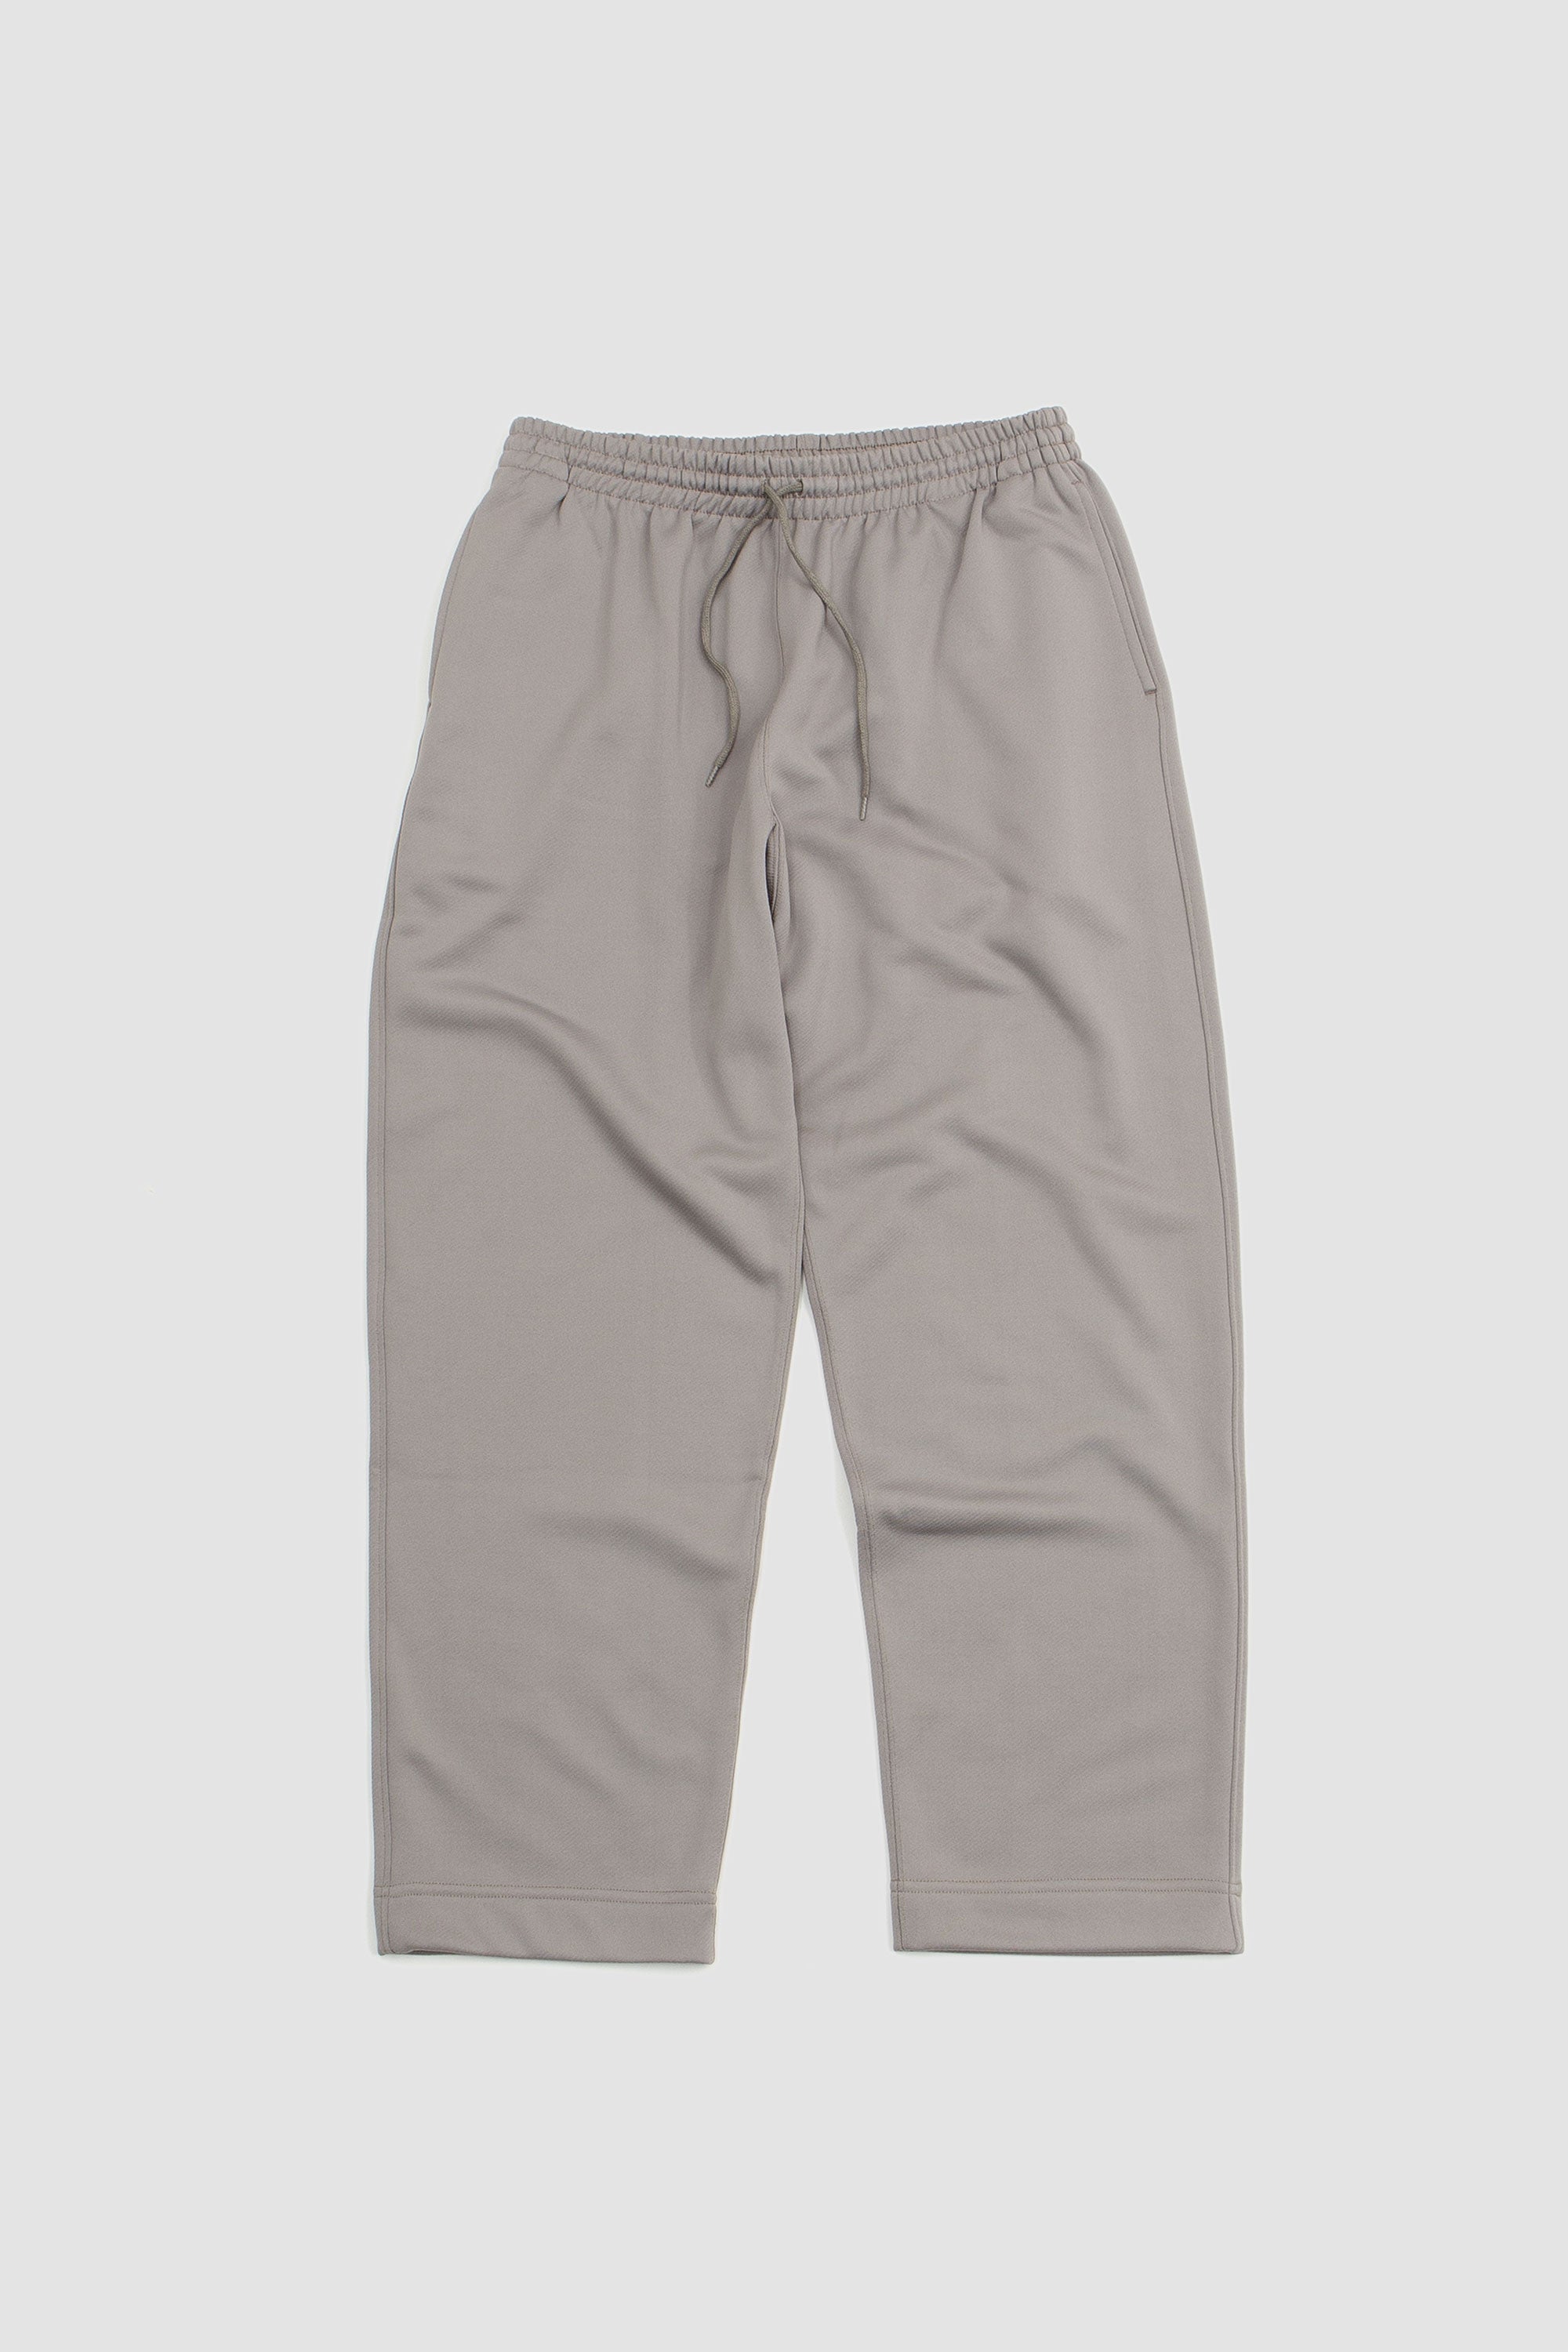 SPORTIVO [Sport trouser light grey]